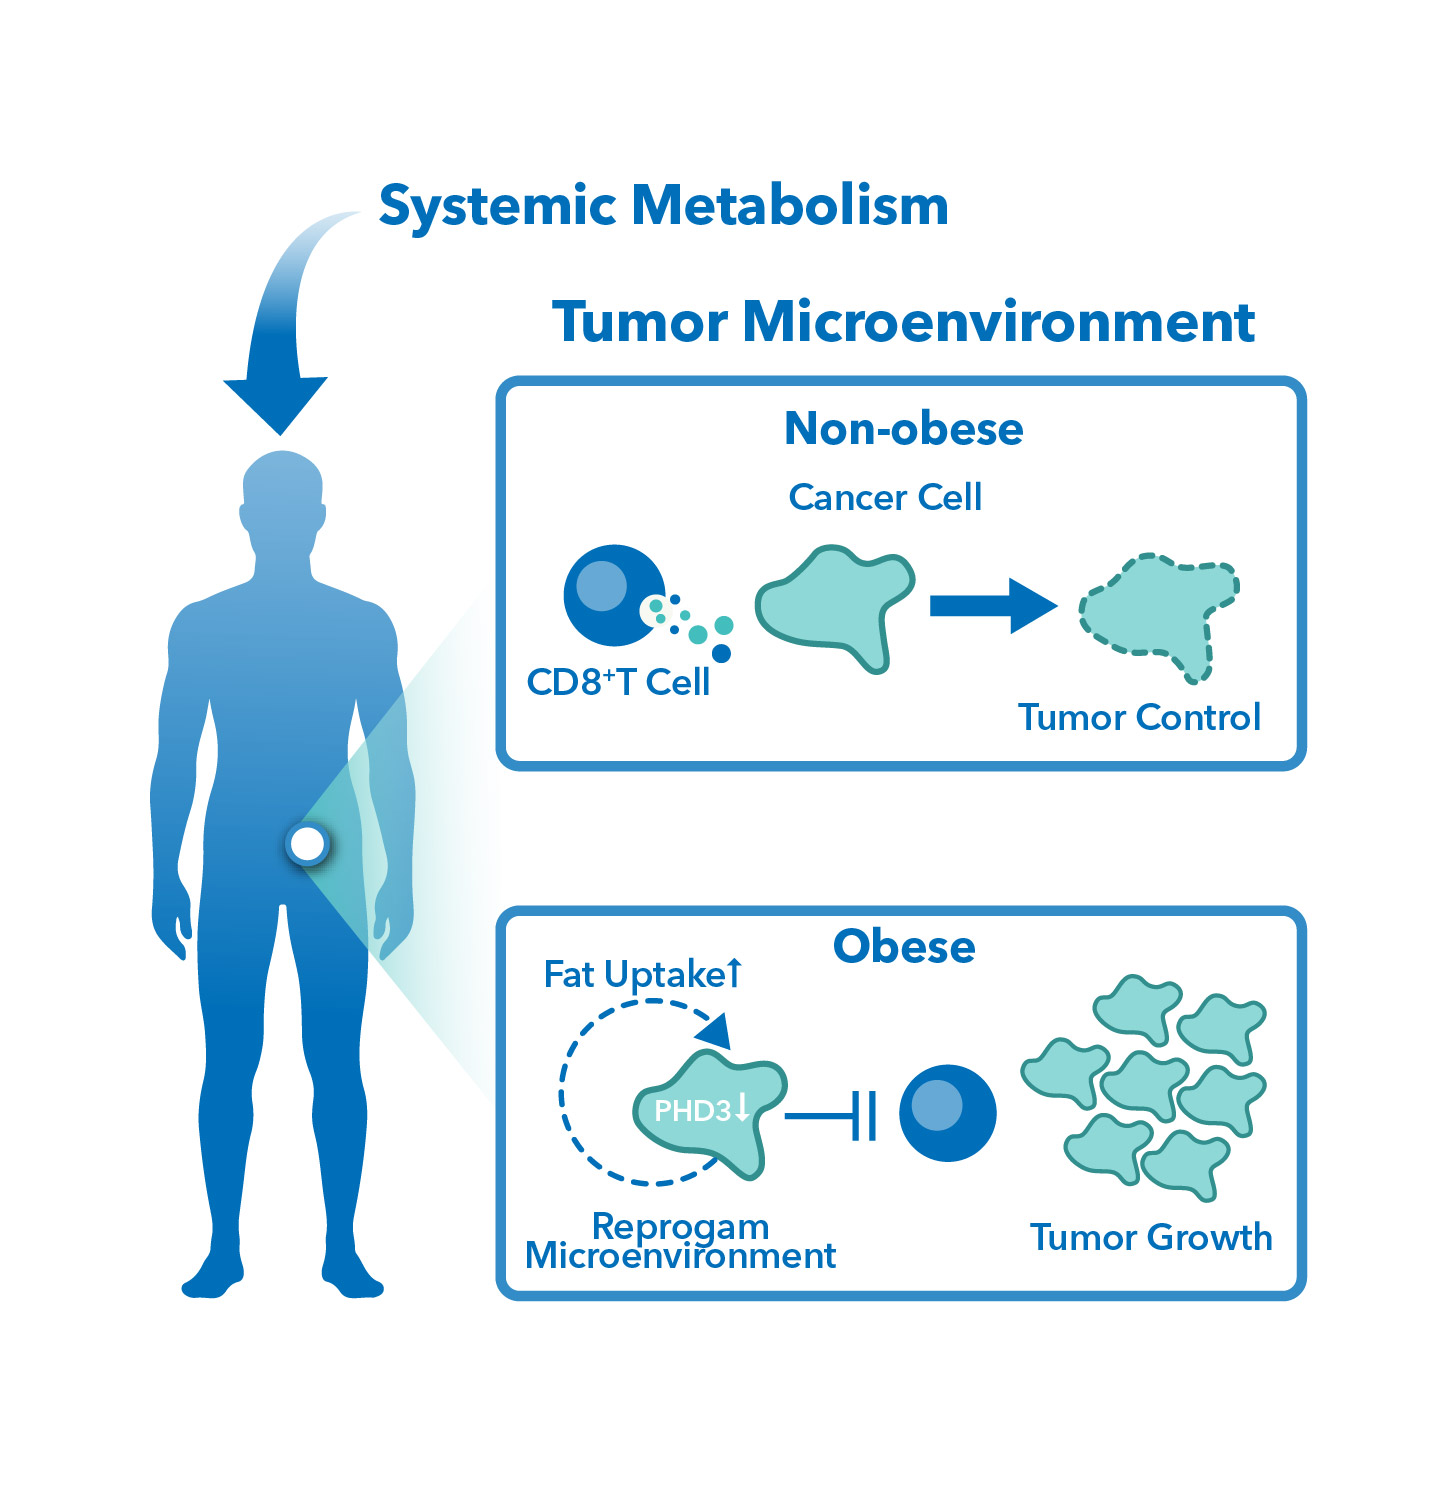 Diet-Induced Obesity Tumor Models for Cancer Studies